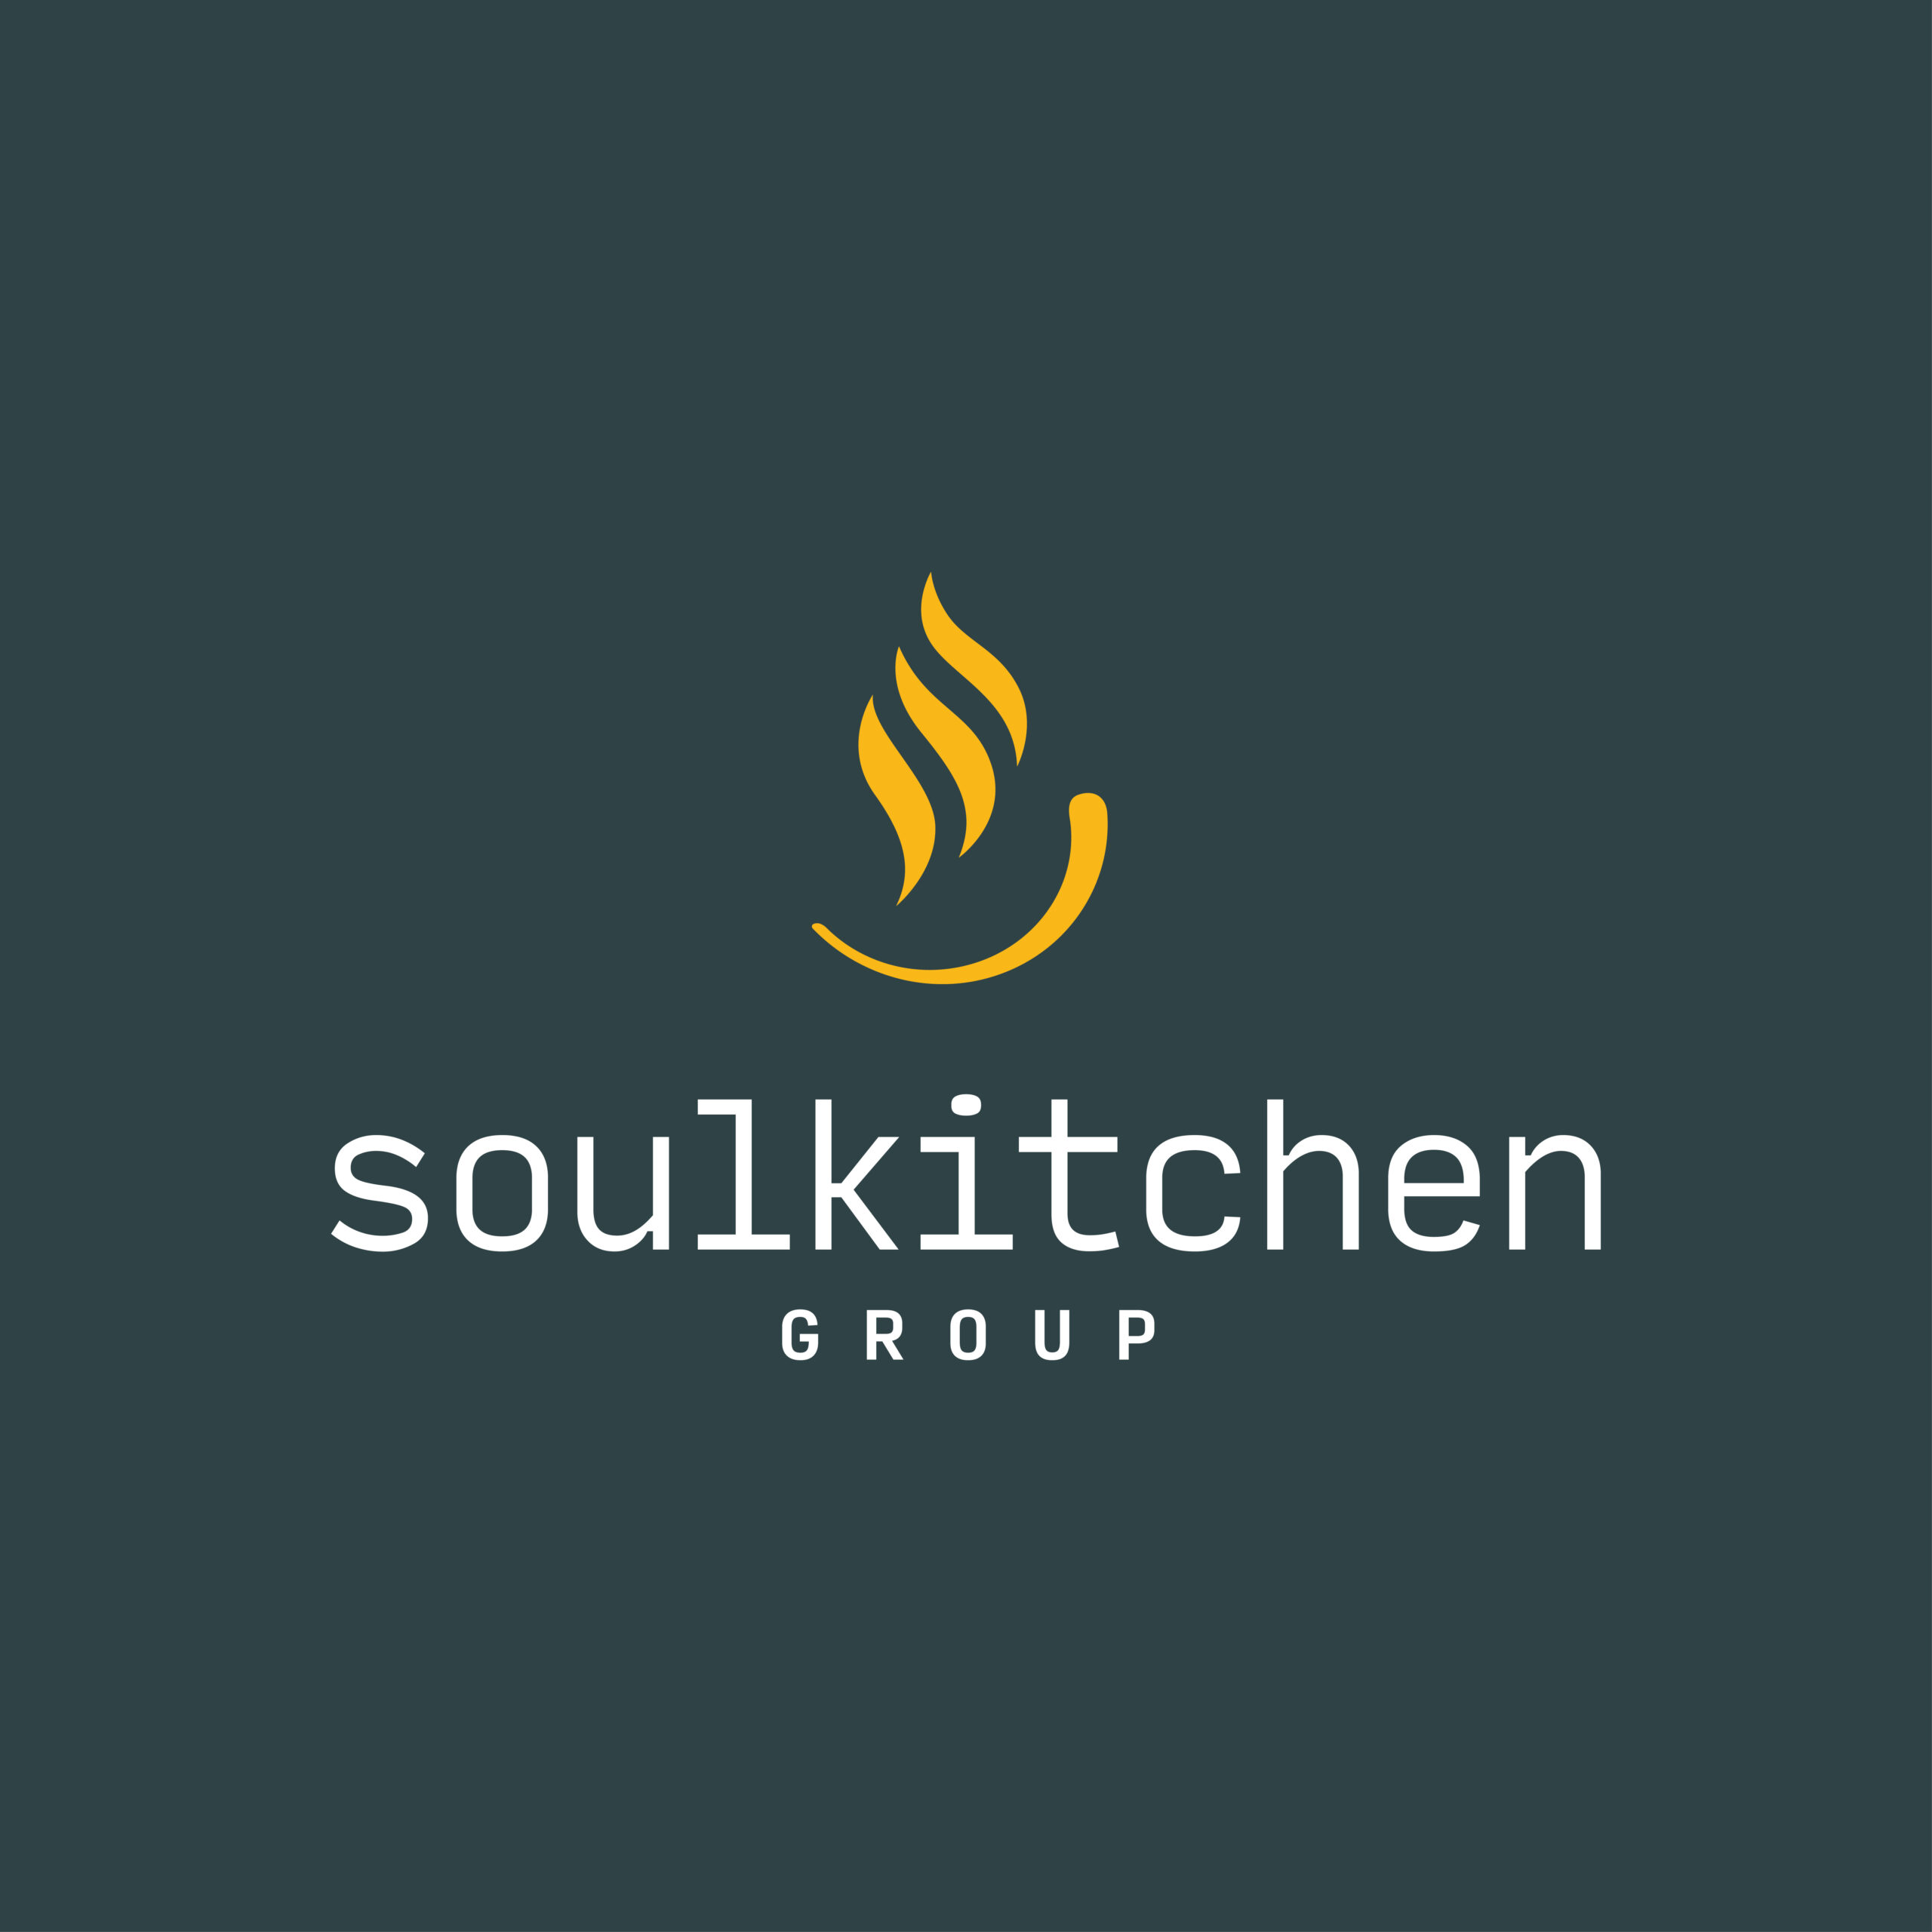 Soulkitchen Group